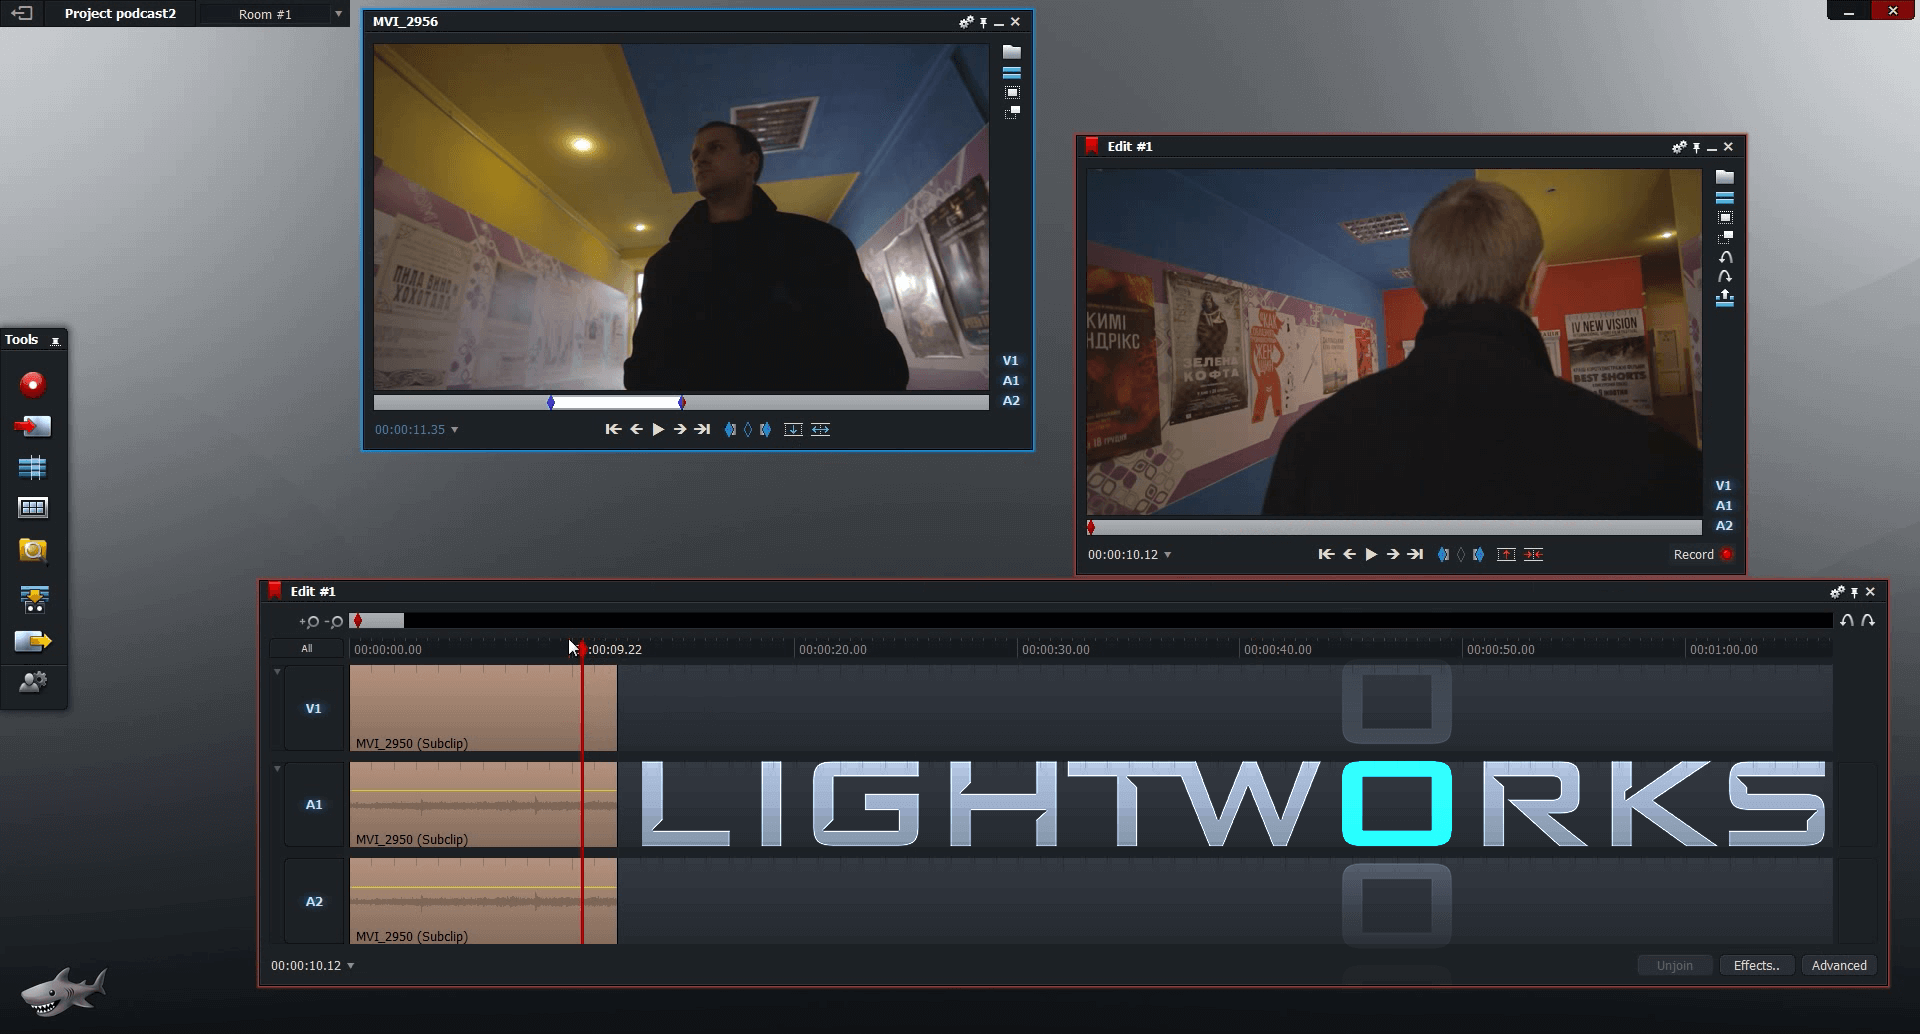 lightworks v12 tutorial review r - IGTV